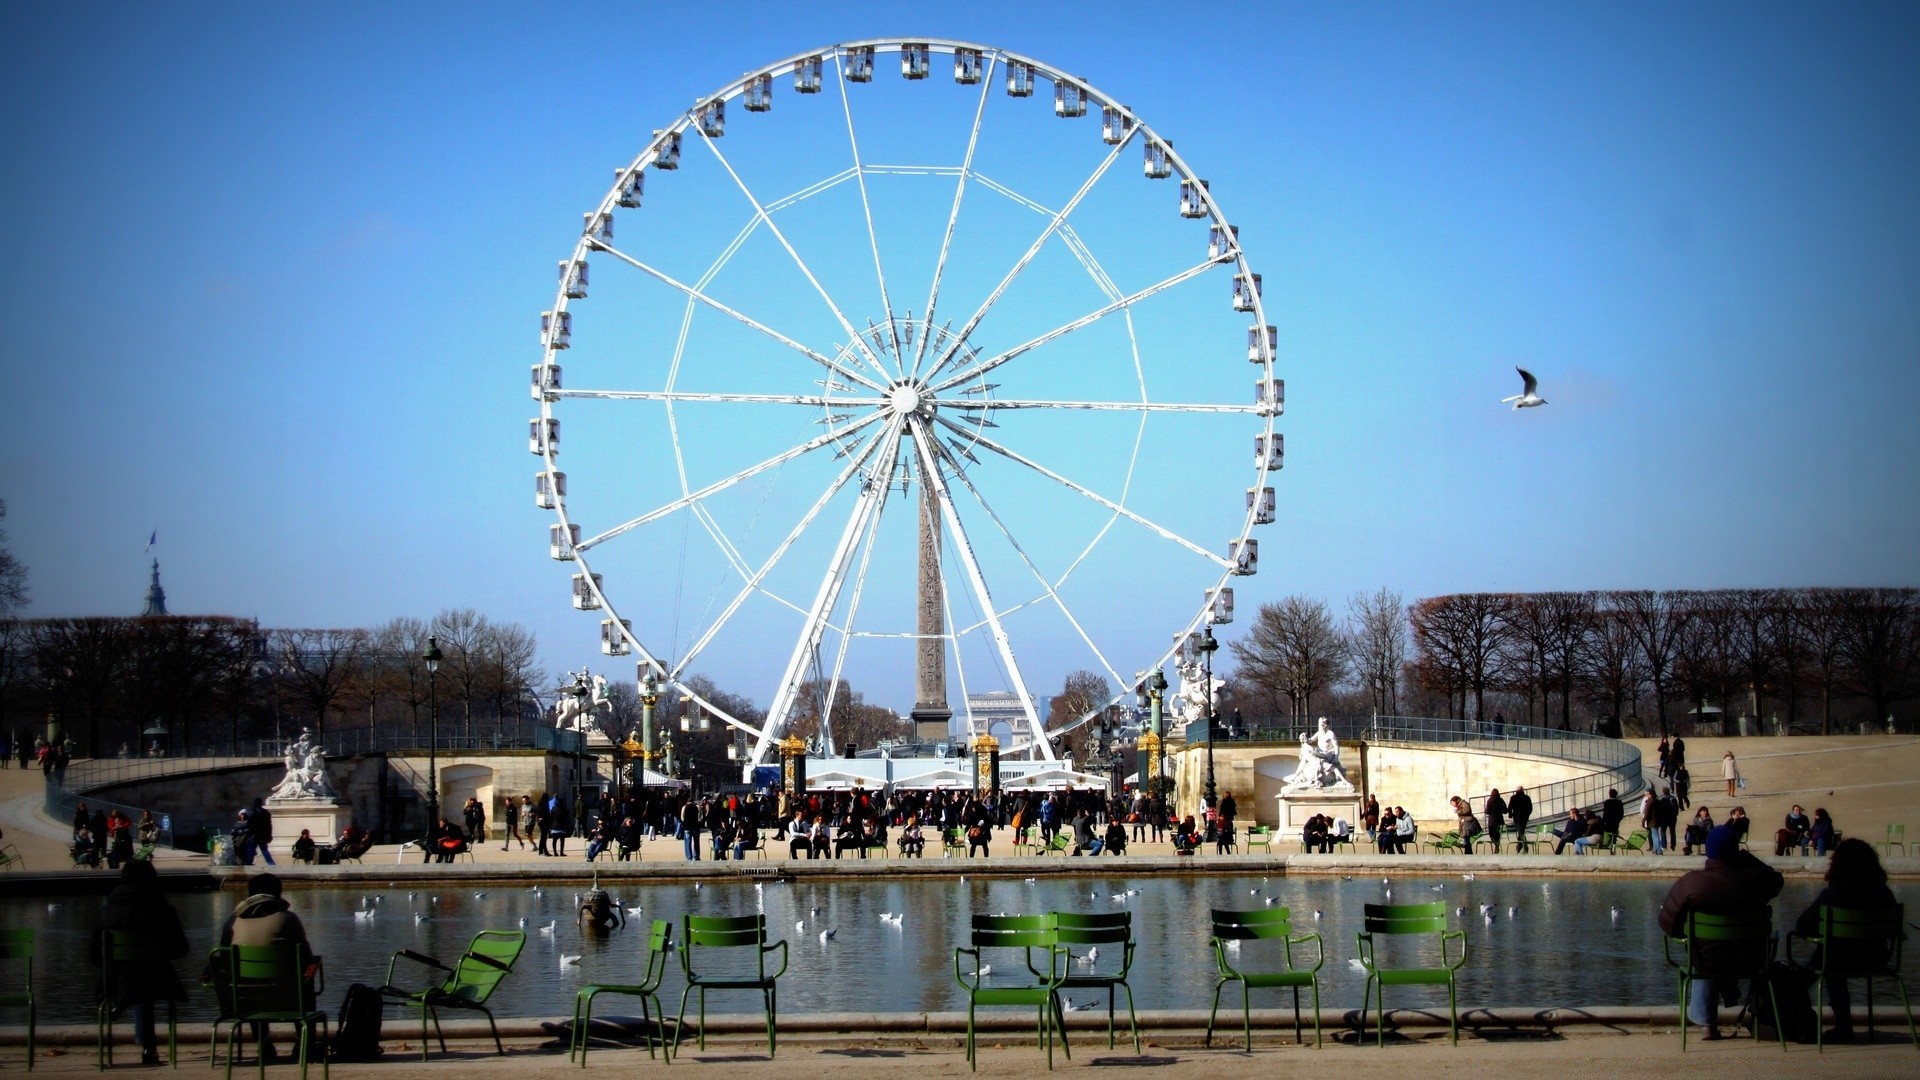 europe sky outdoors travel city ferris wheel festival wheel park architecture entertainment building urban carousel